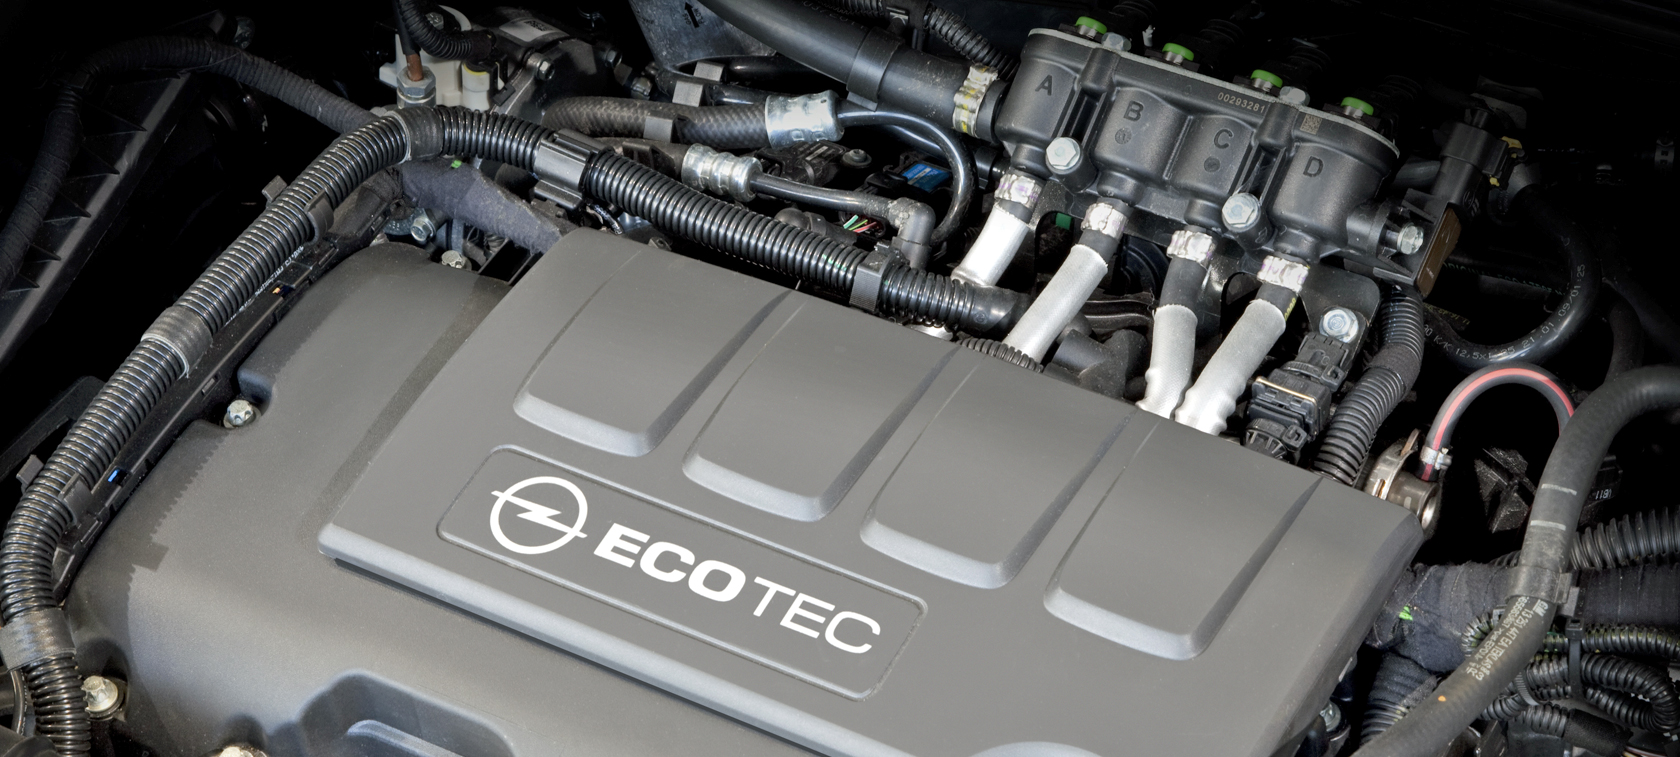 Opel Insignia ecoFLEX - autogas goes premium